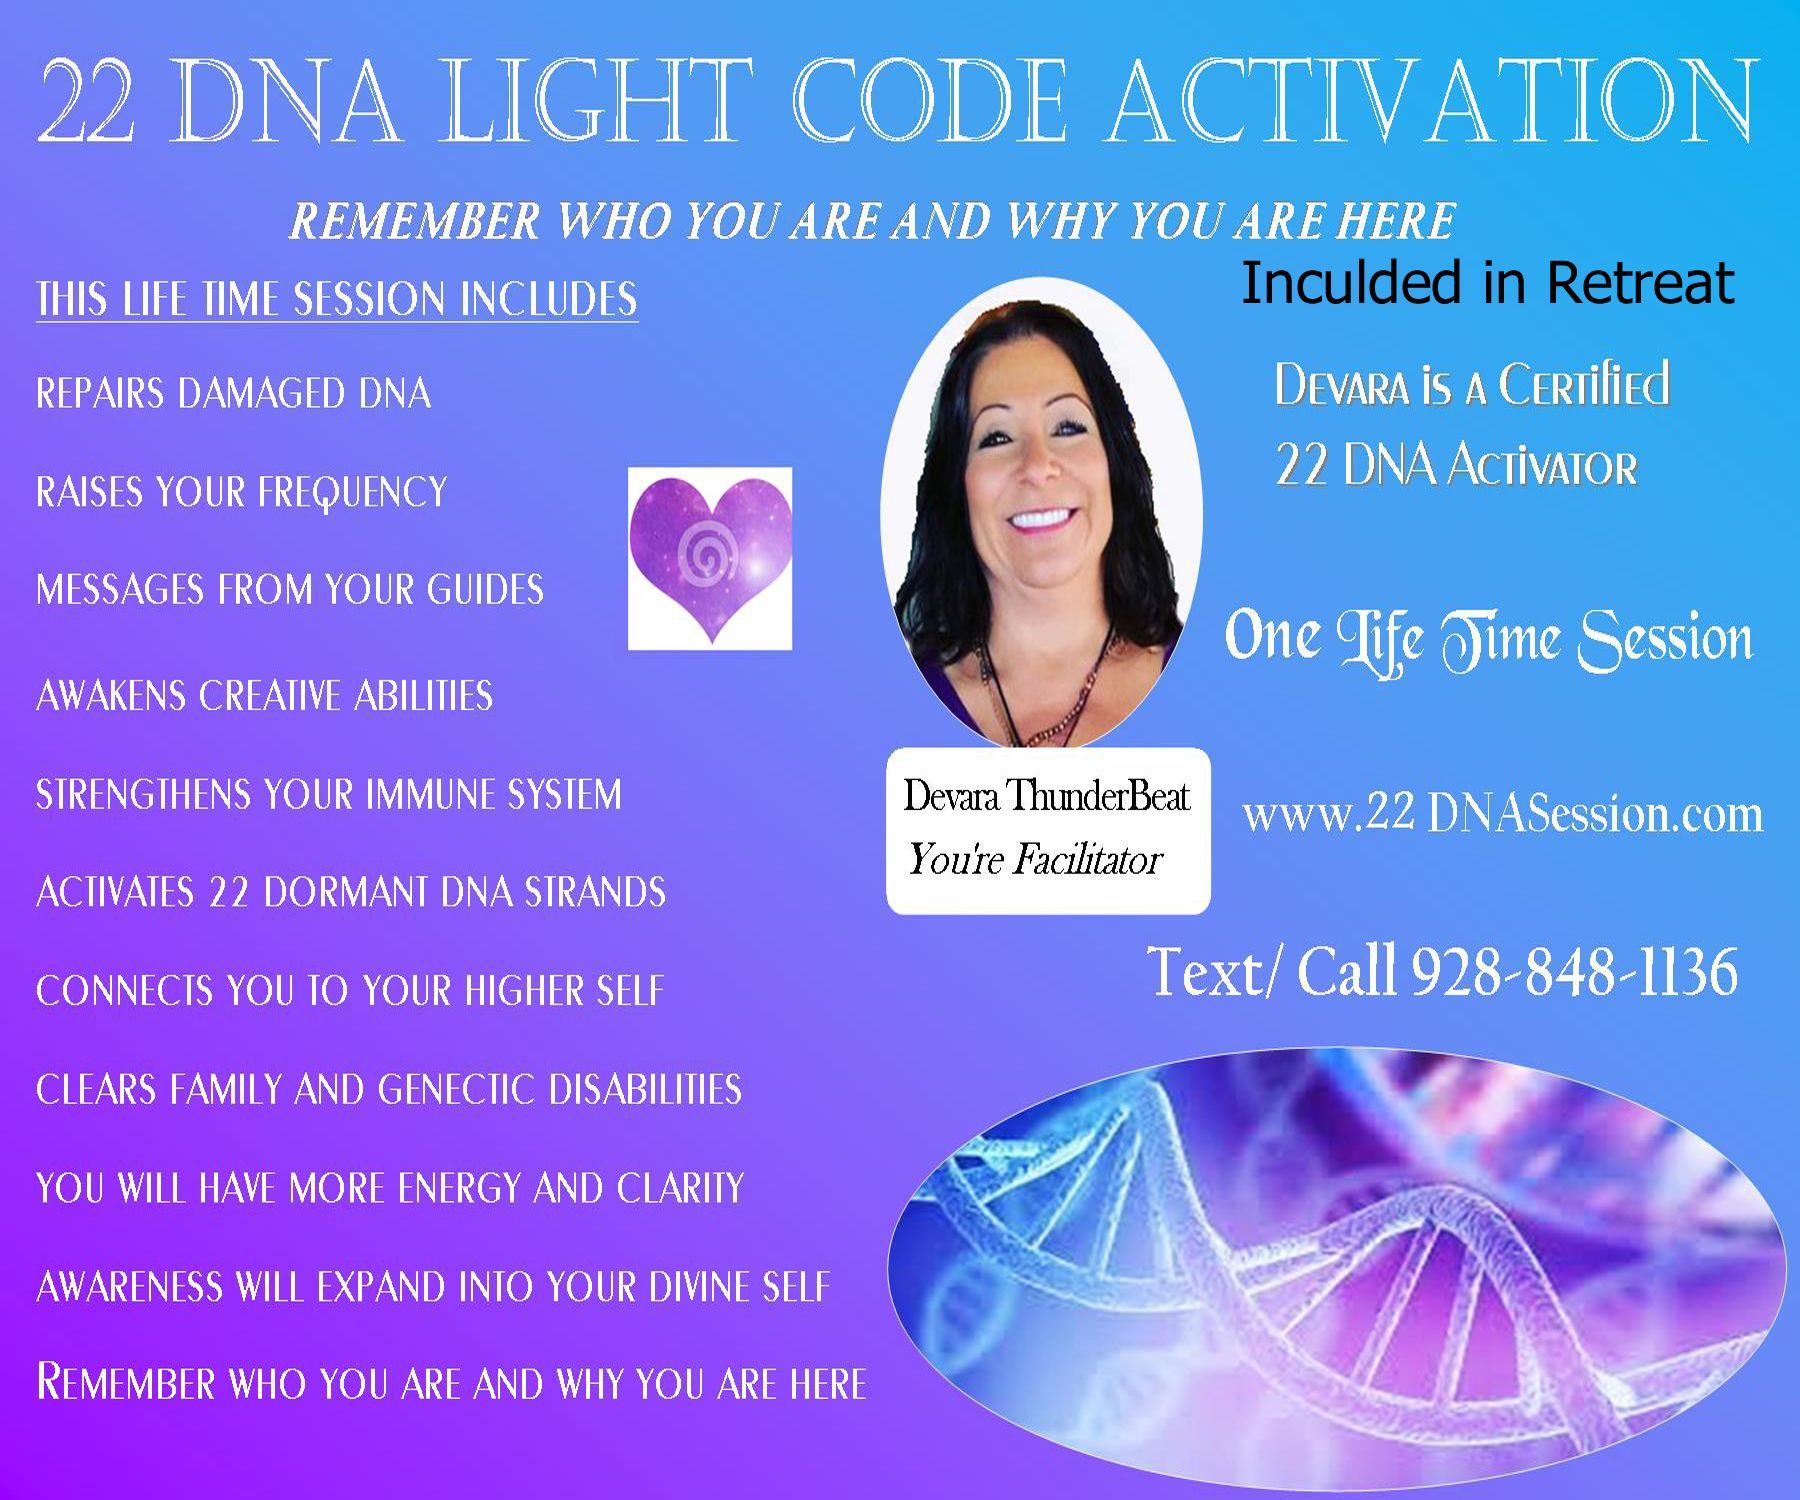 DNA activation image